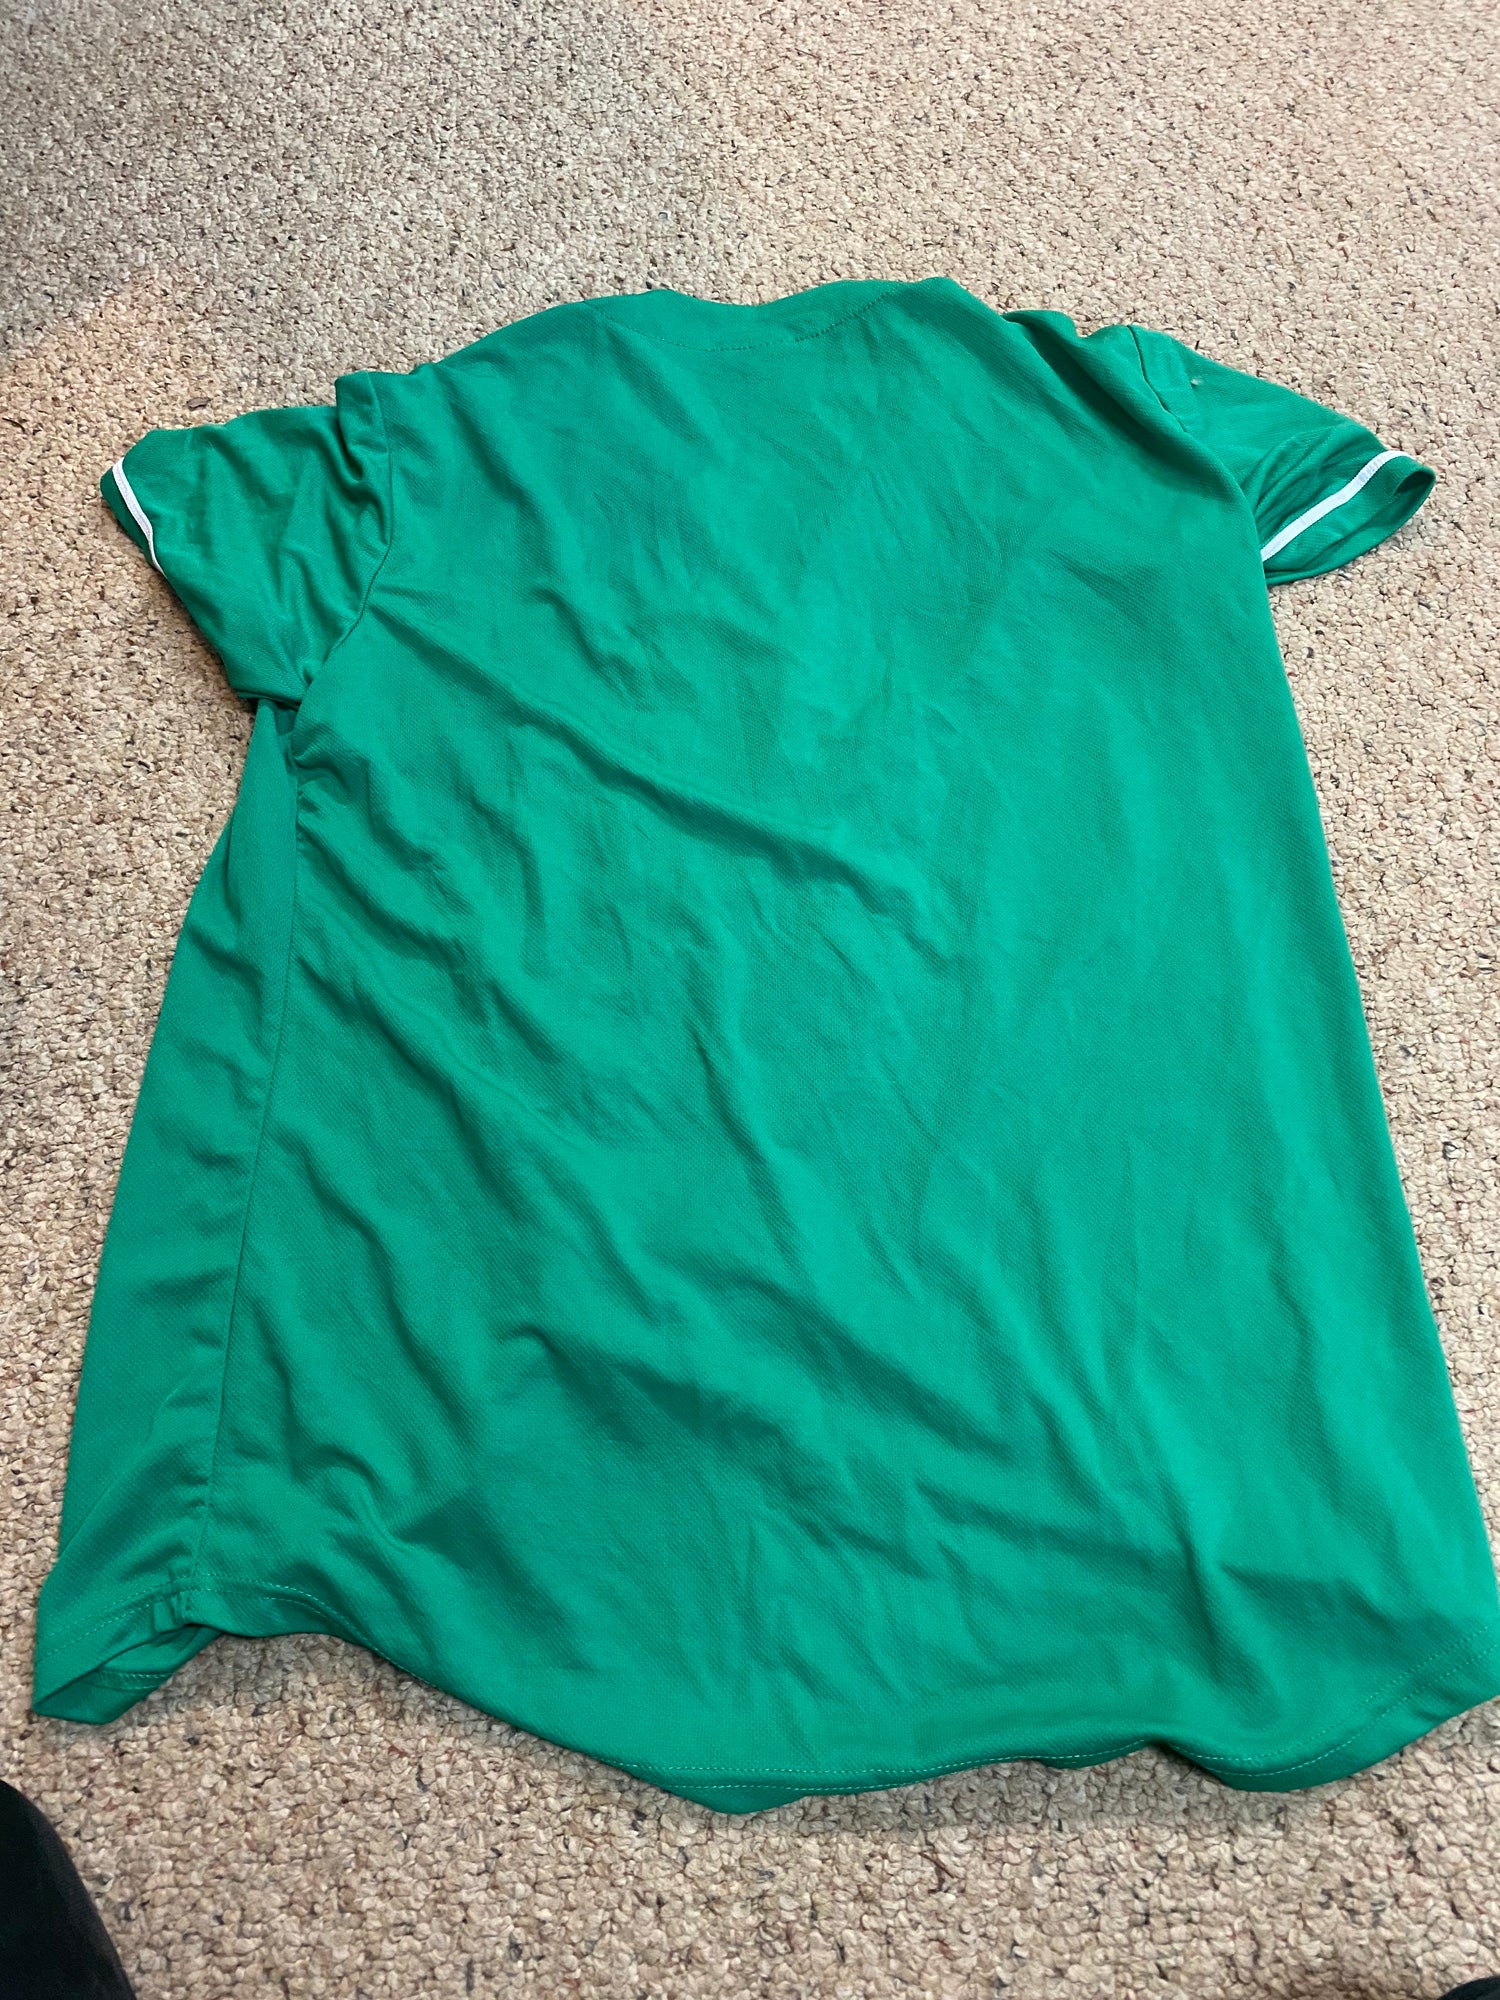 570Creative Phillies St. Patrick's Day Shirt